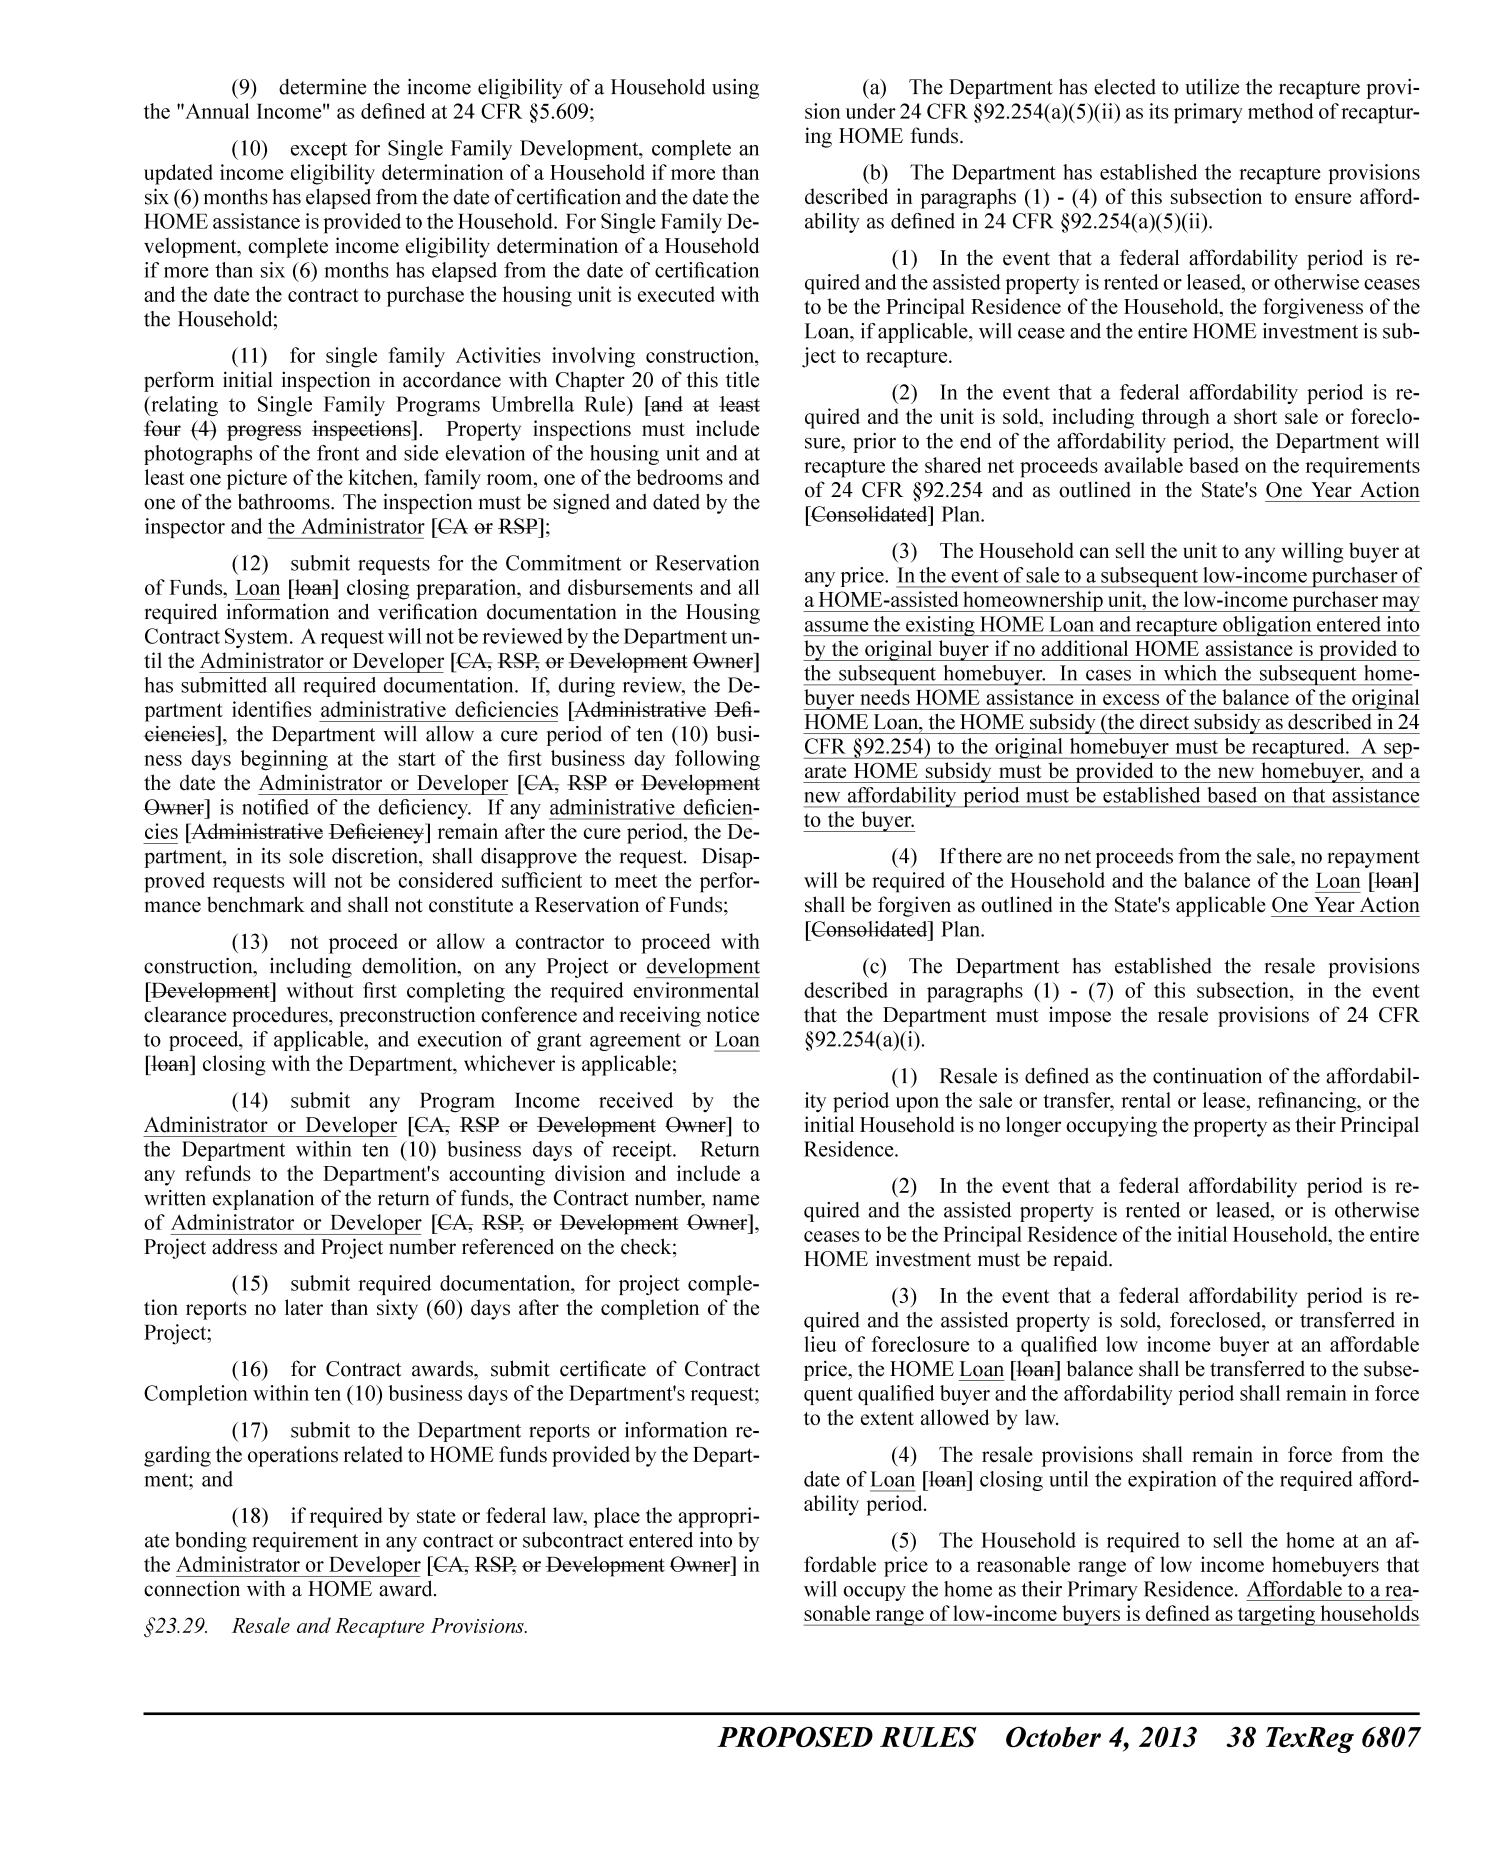 Texas Register, Volume 38, Number 40, Pages 6747-6996, October 4, 2013
                                                
                                                    6807
                                                